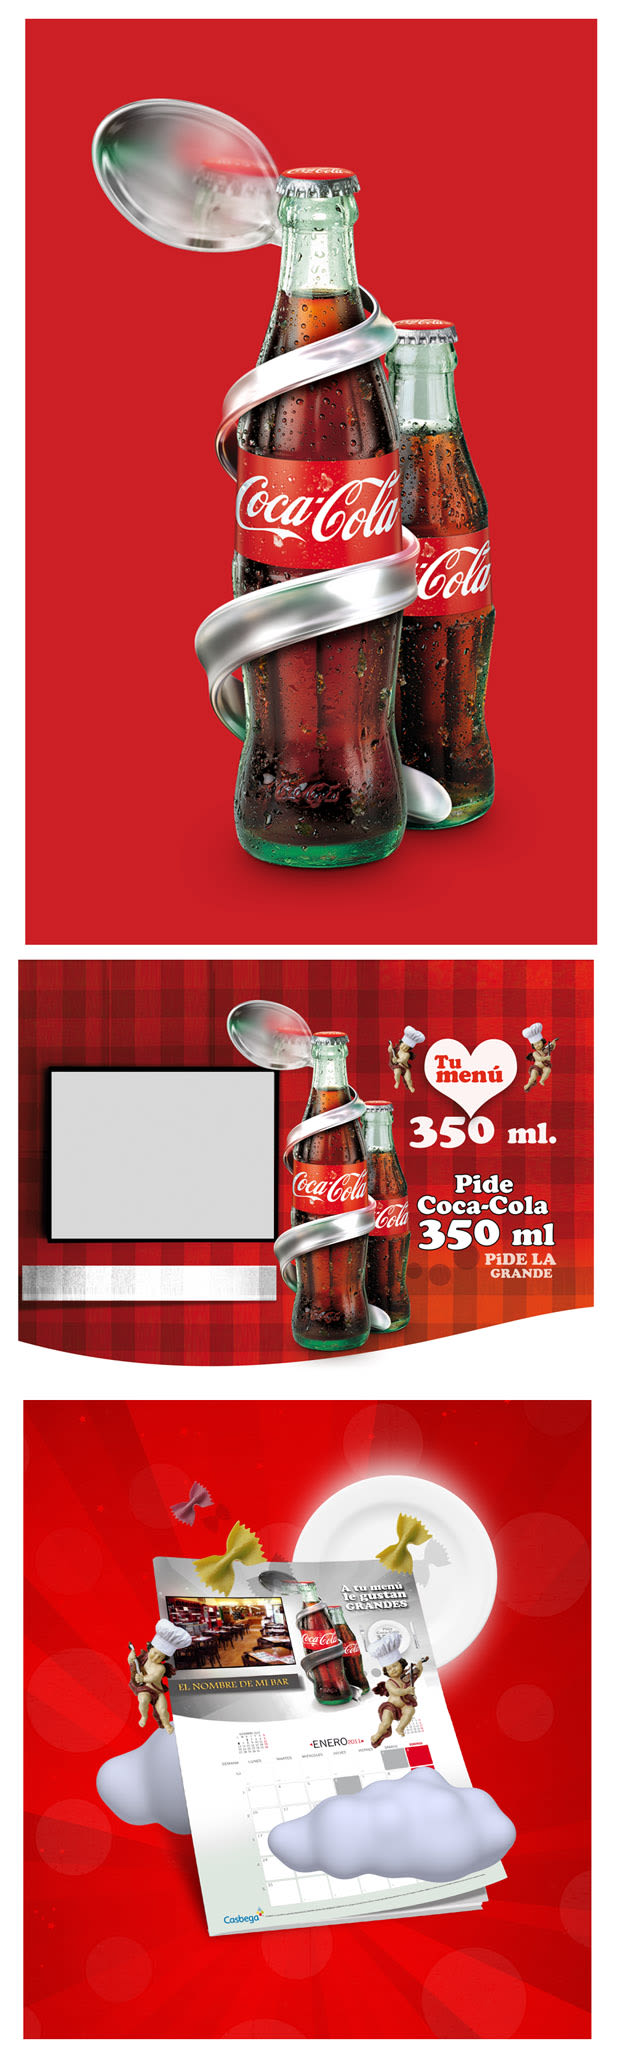 Coca-Cola 2 1